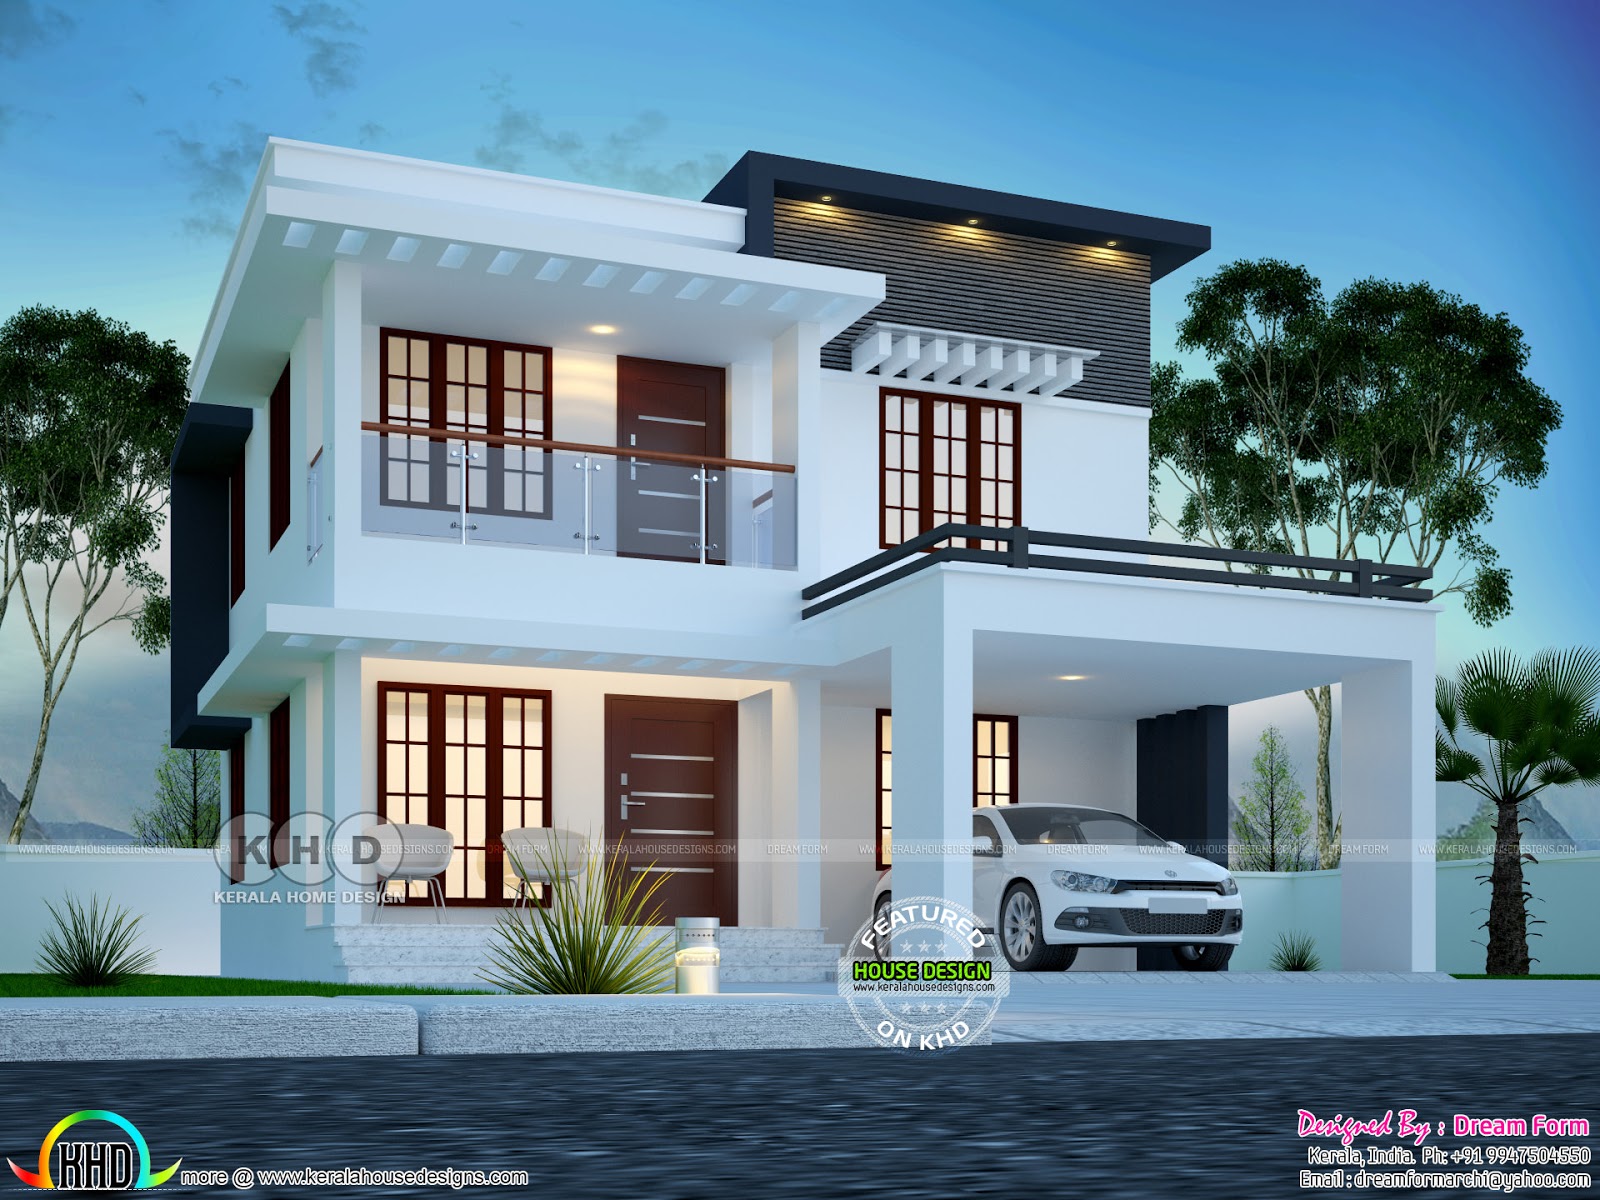 3 bedroom 1790 sq.ft modern home design - Kerala home design and floor